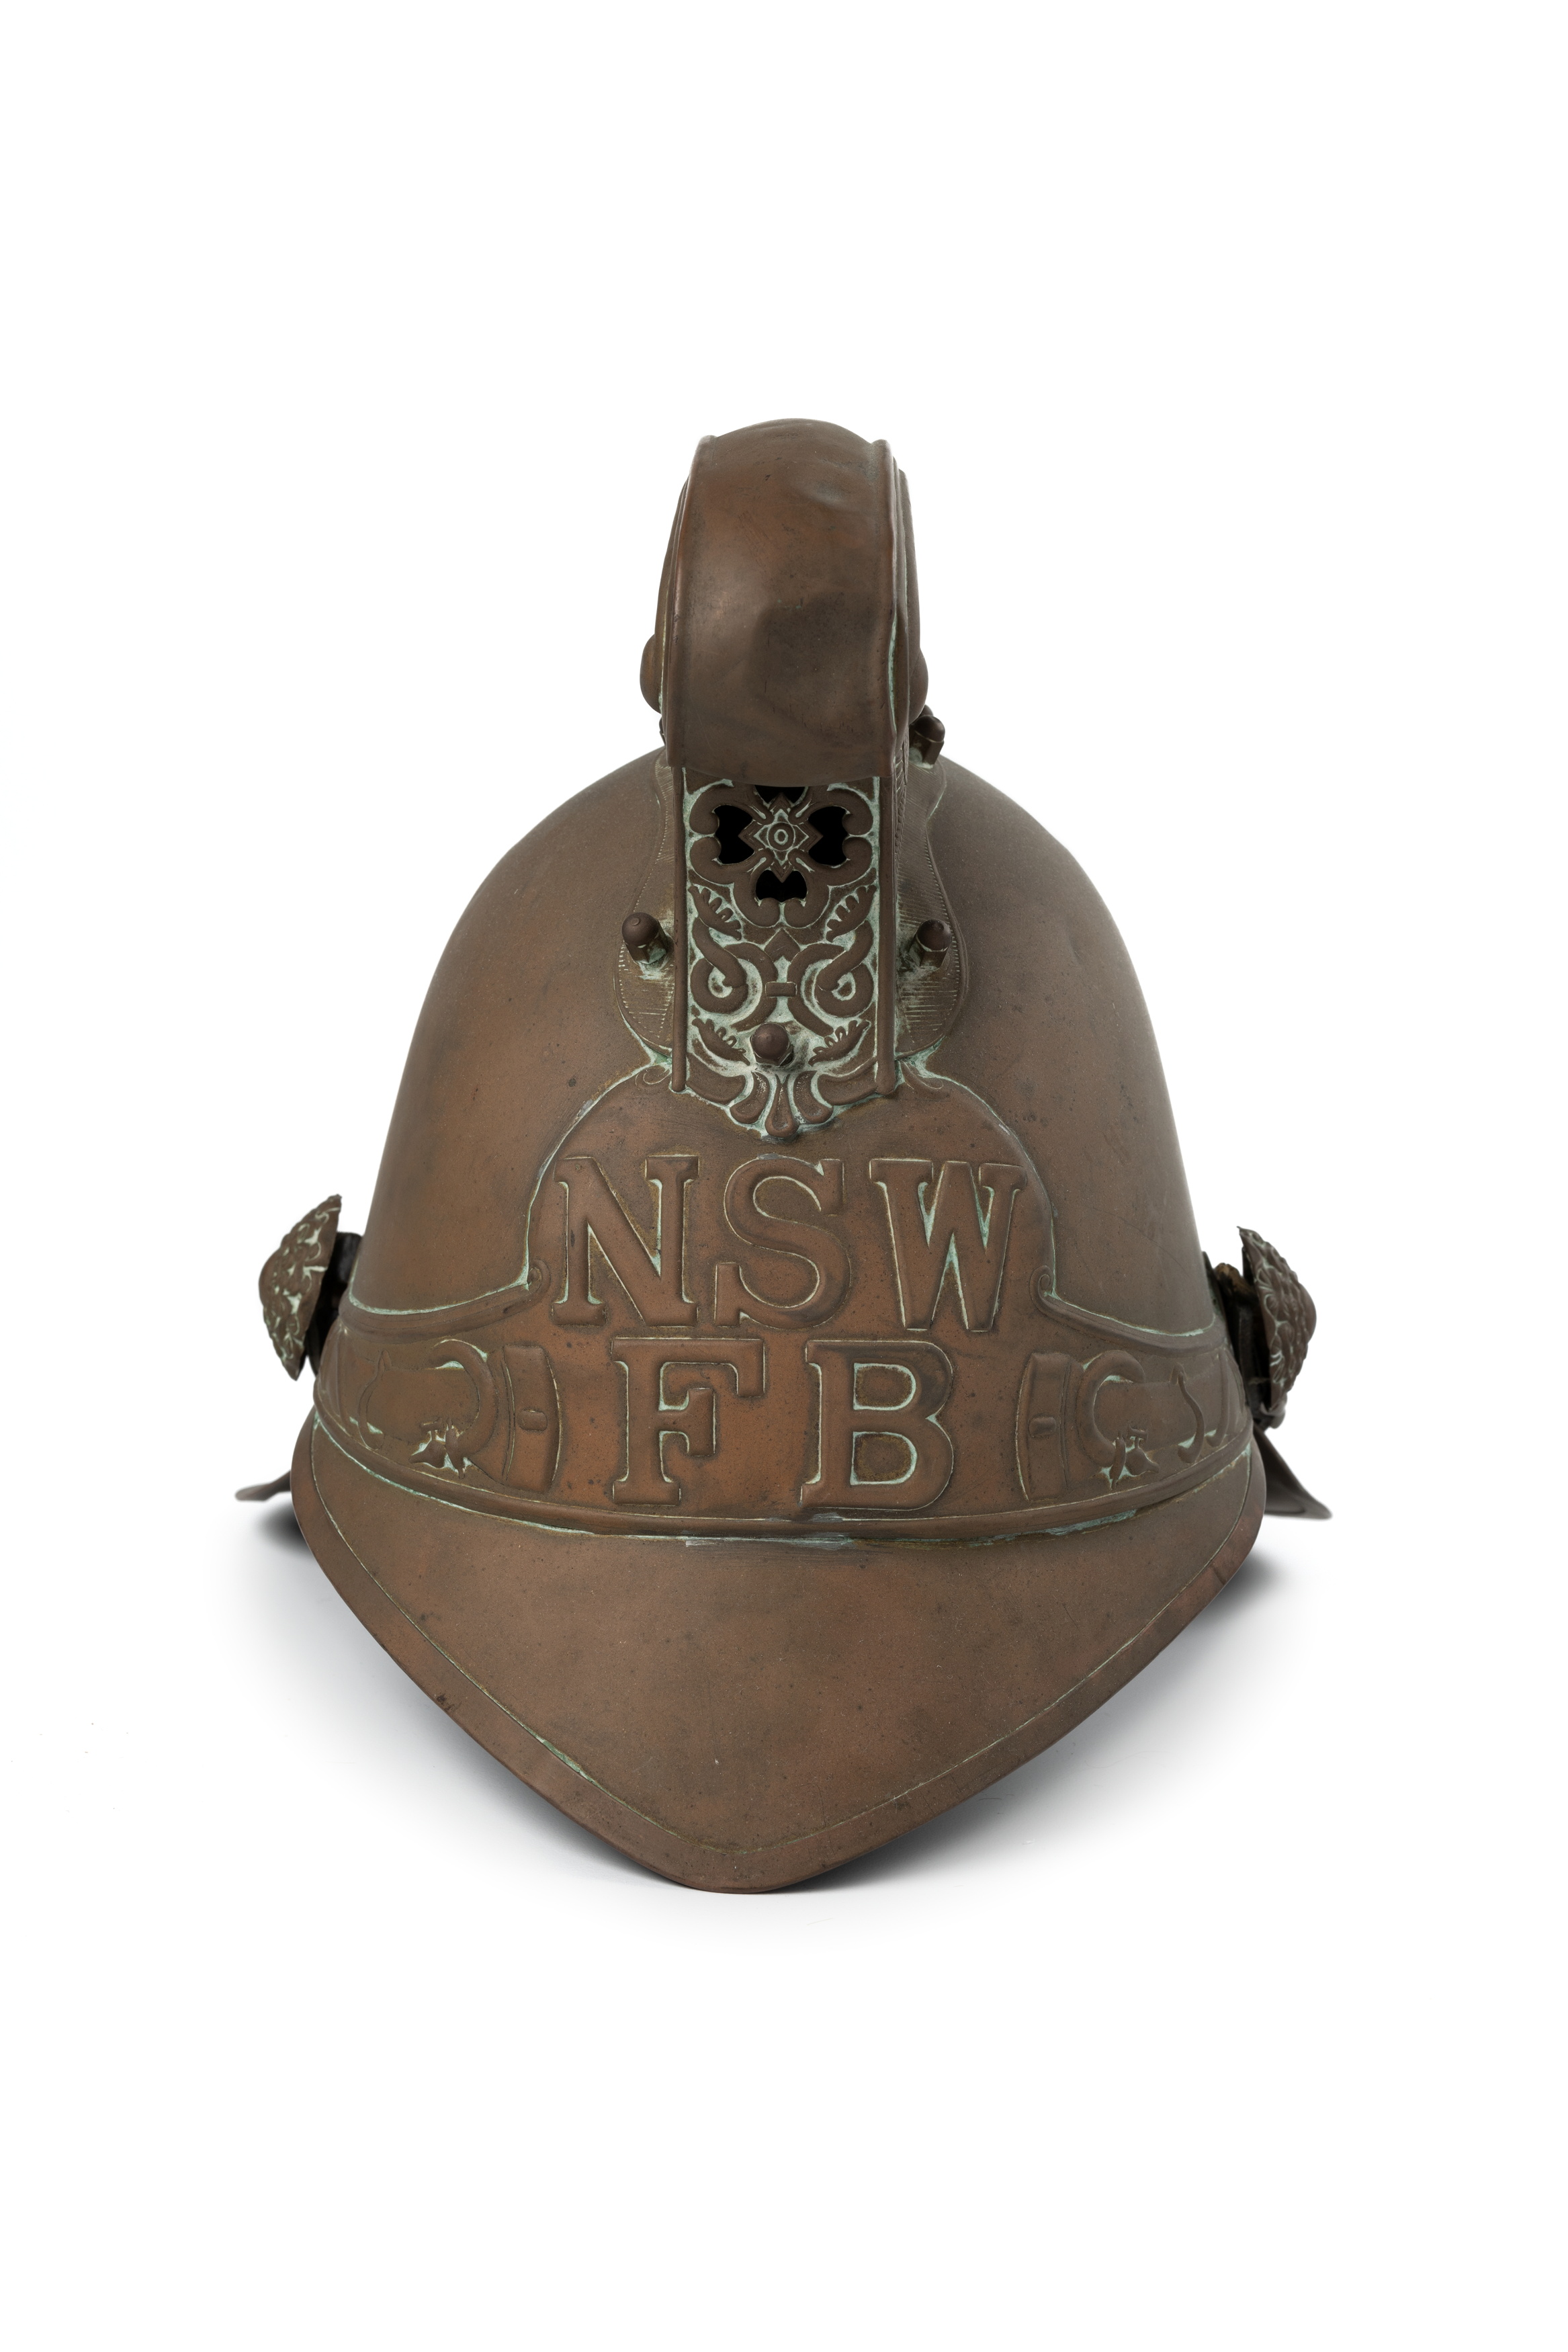 NSWFB fireman's helmet, 1940-64